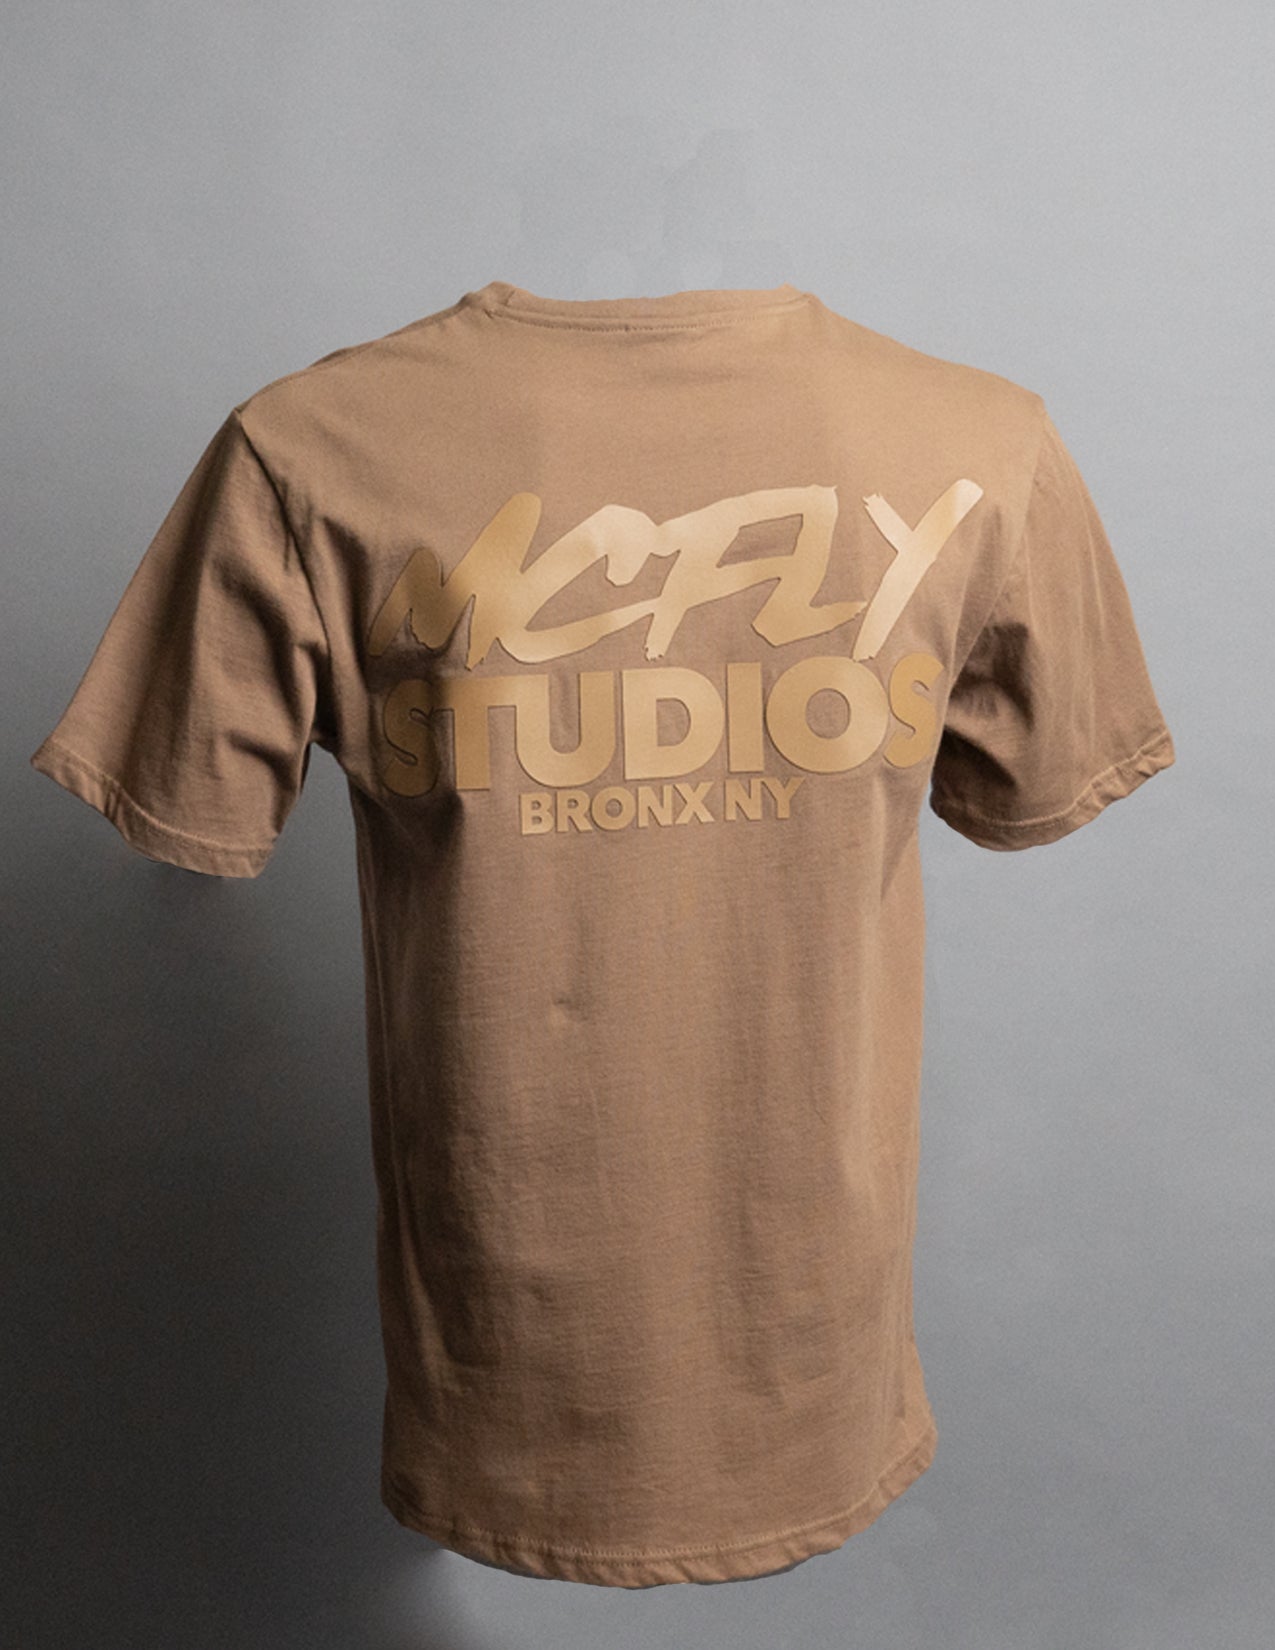 MCFLY Studio Shirt "Brown"